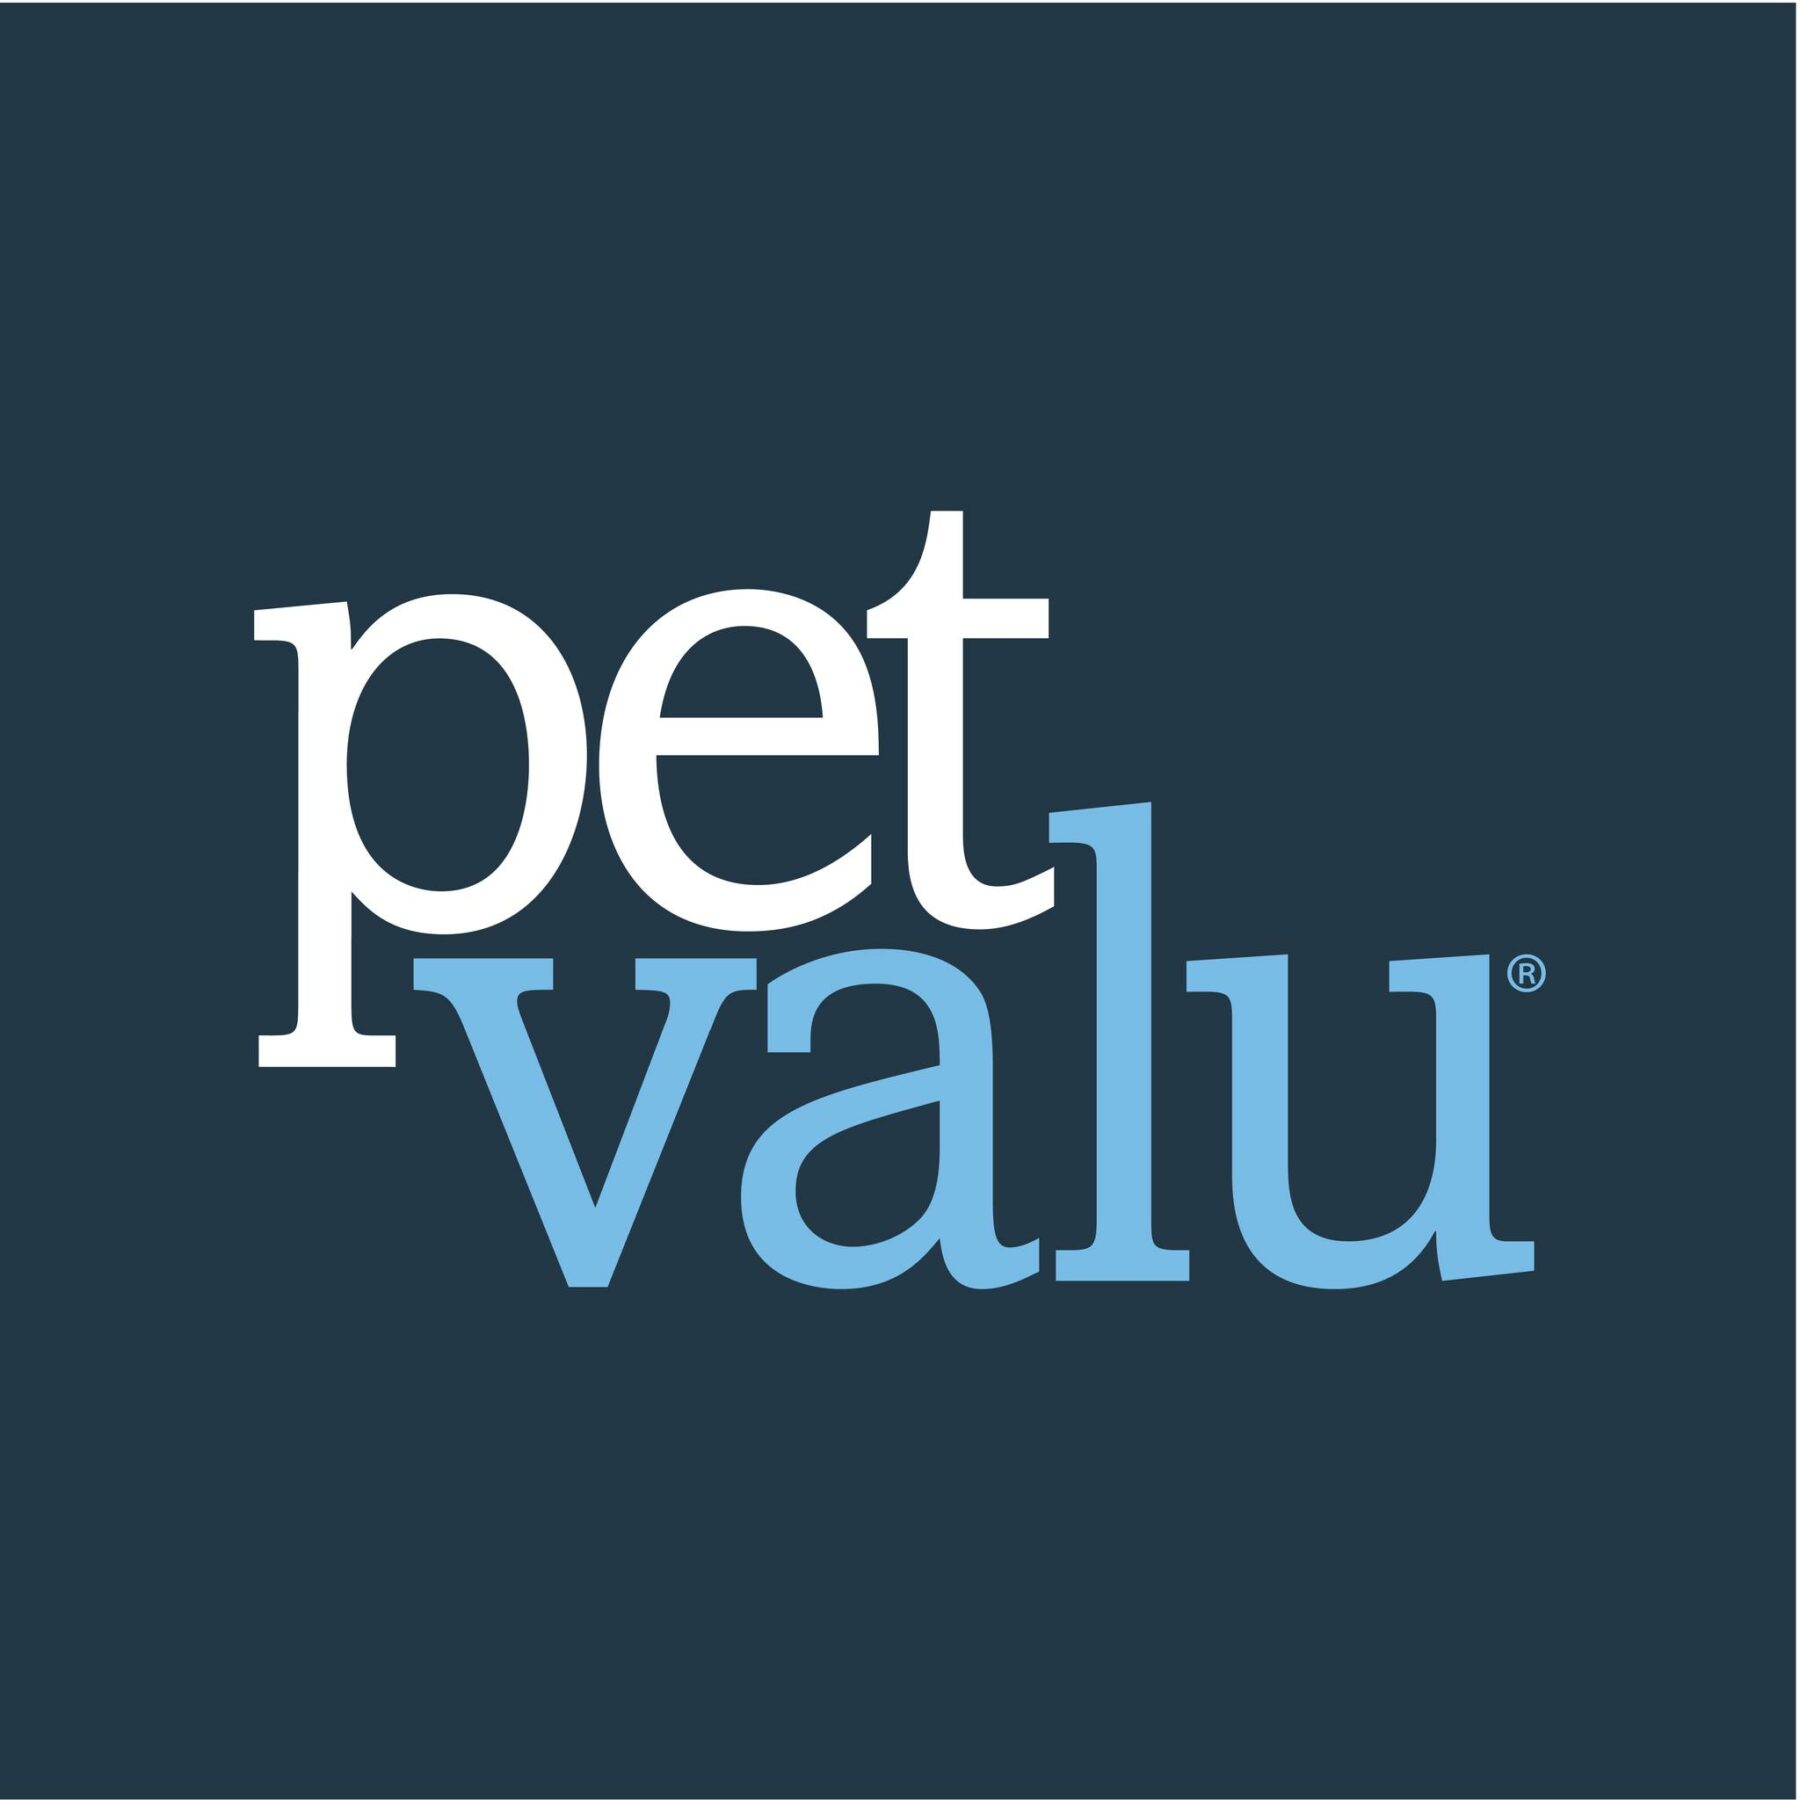 PetValu logo